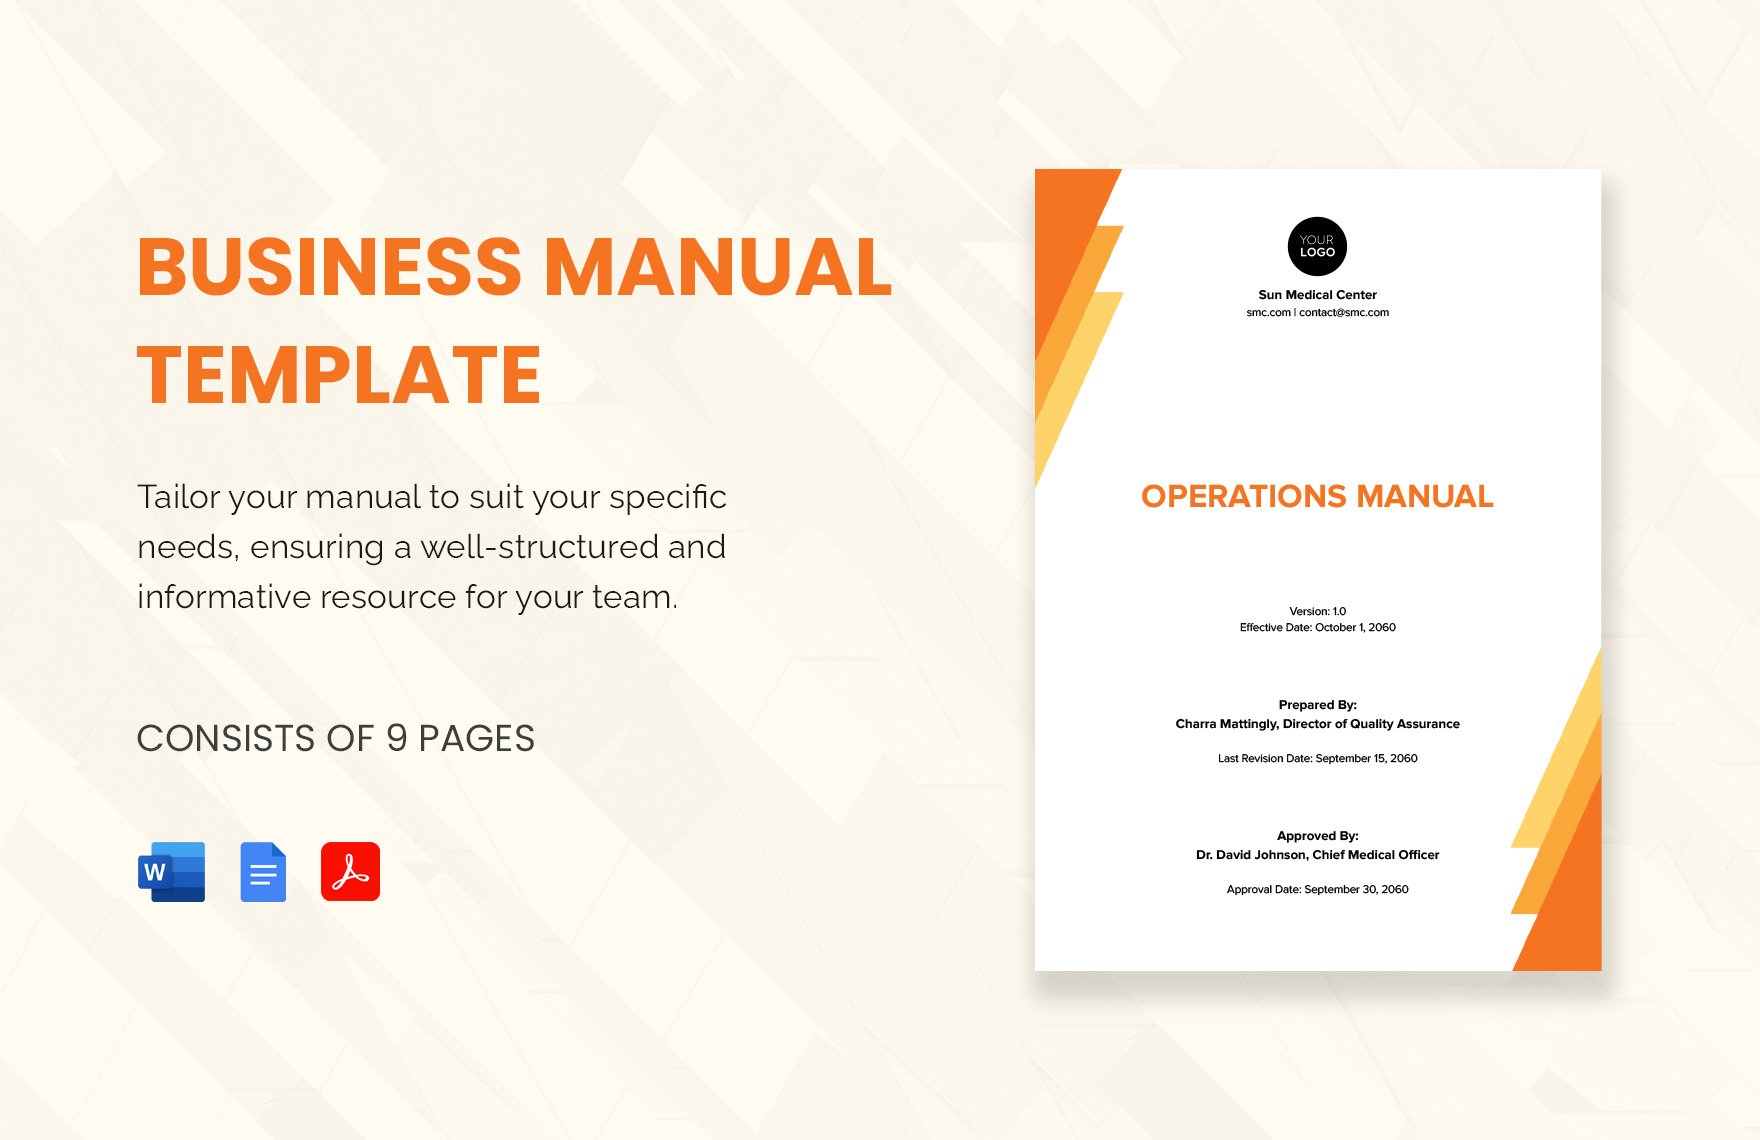 Business Manual Template